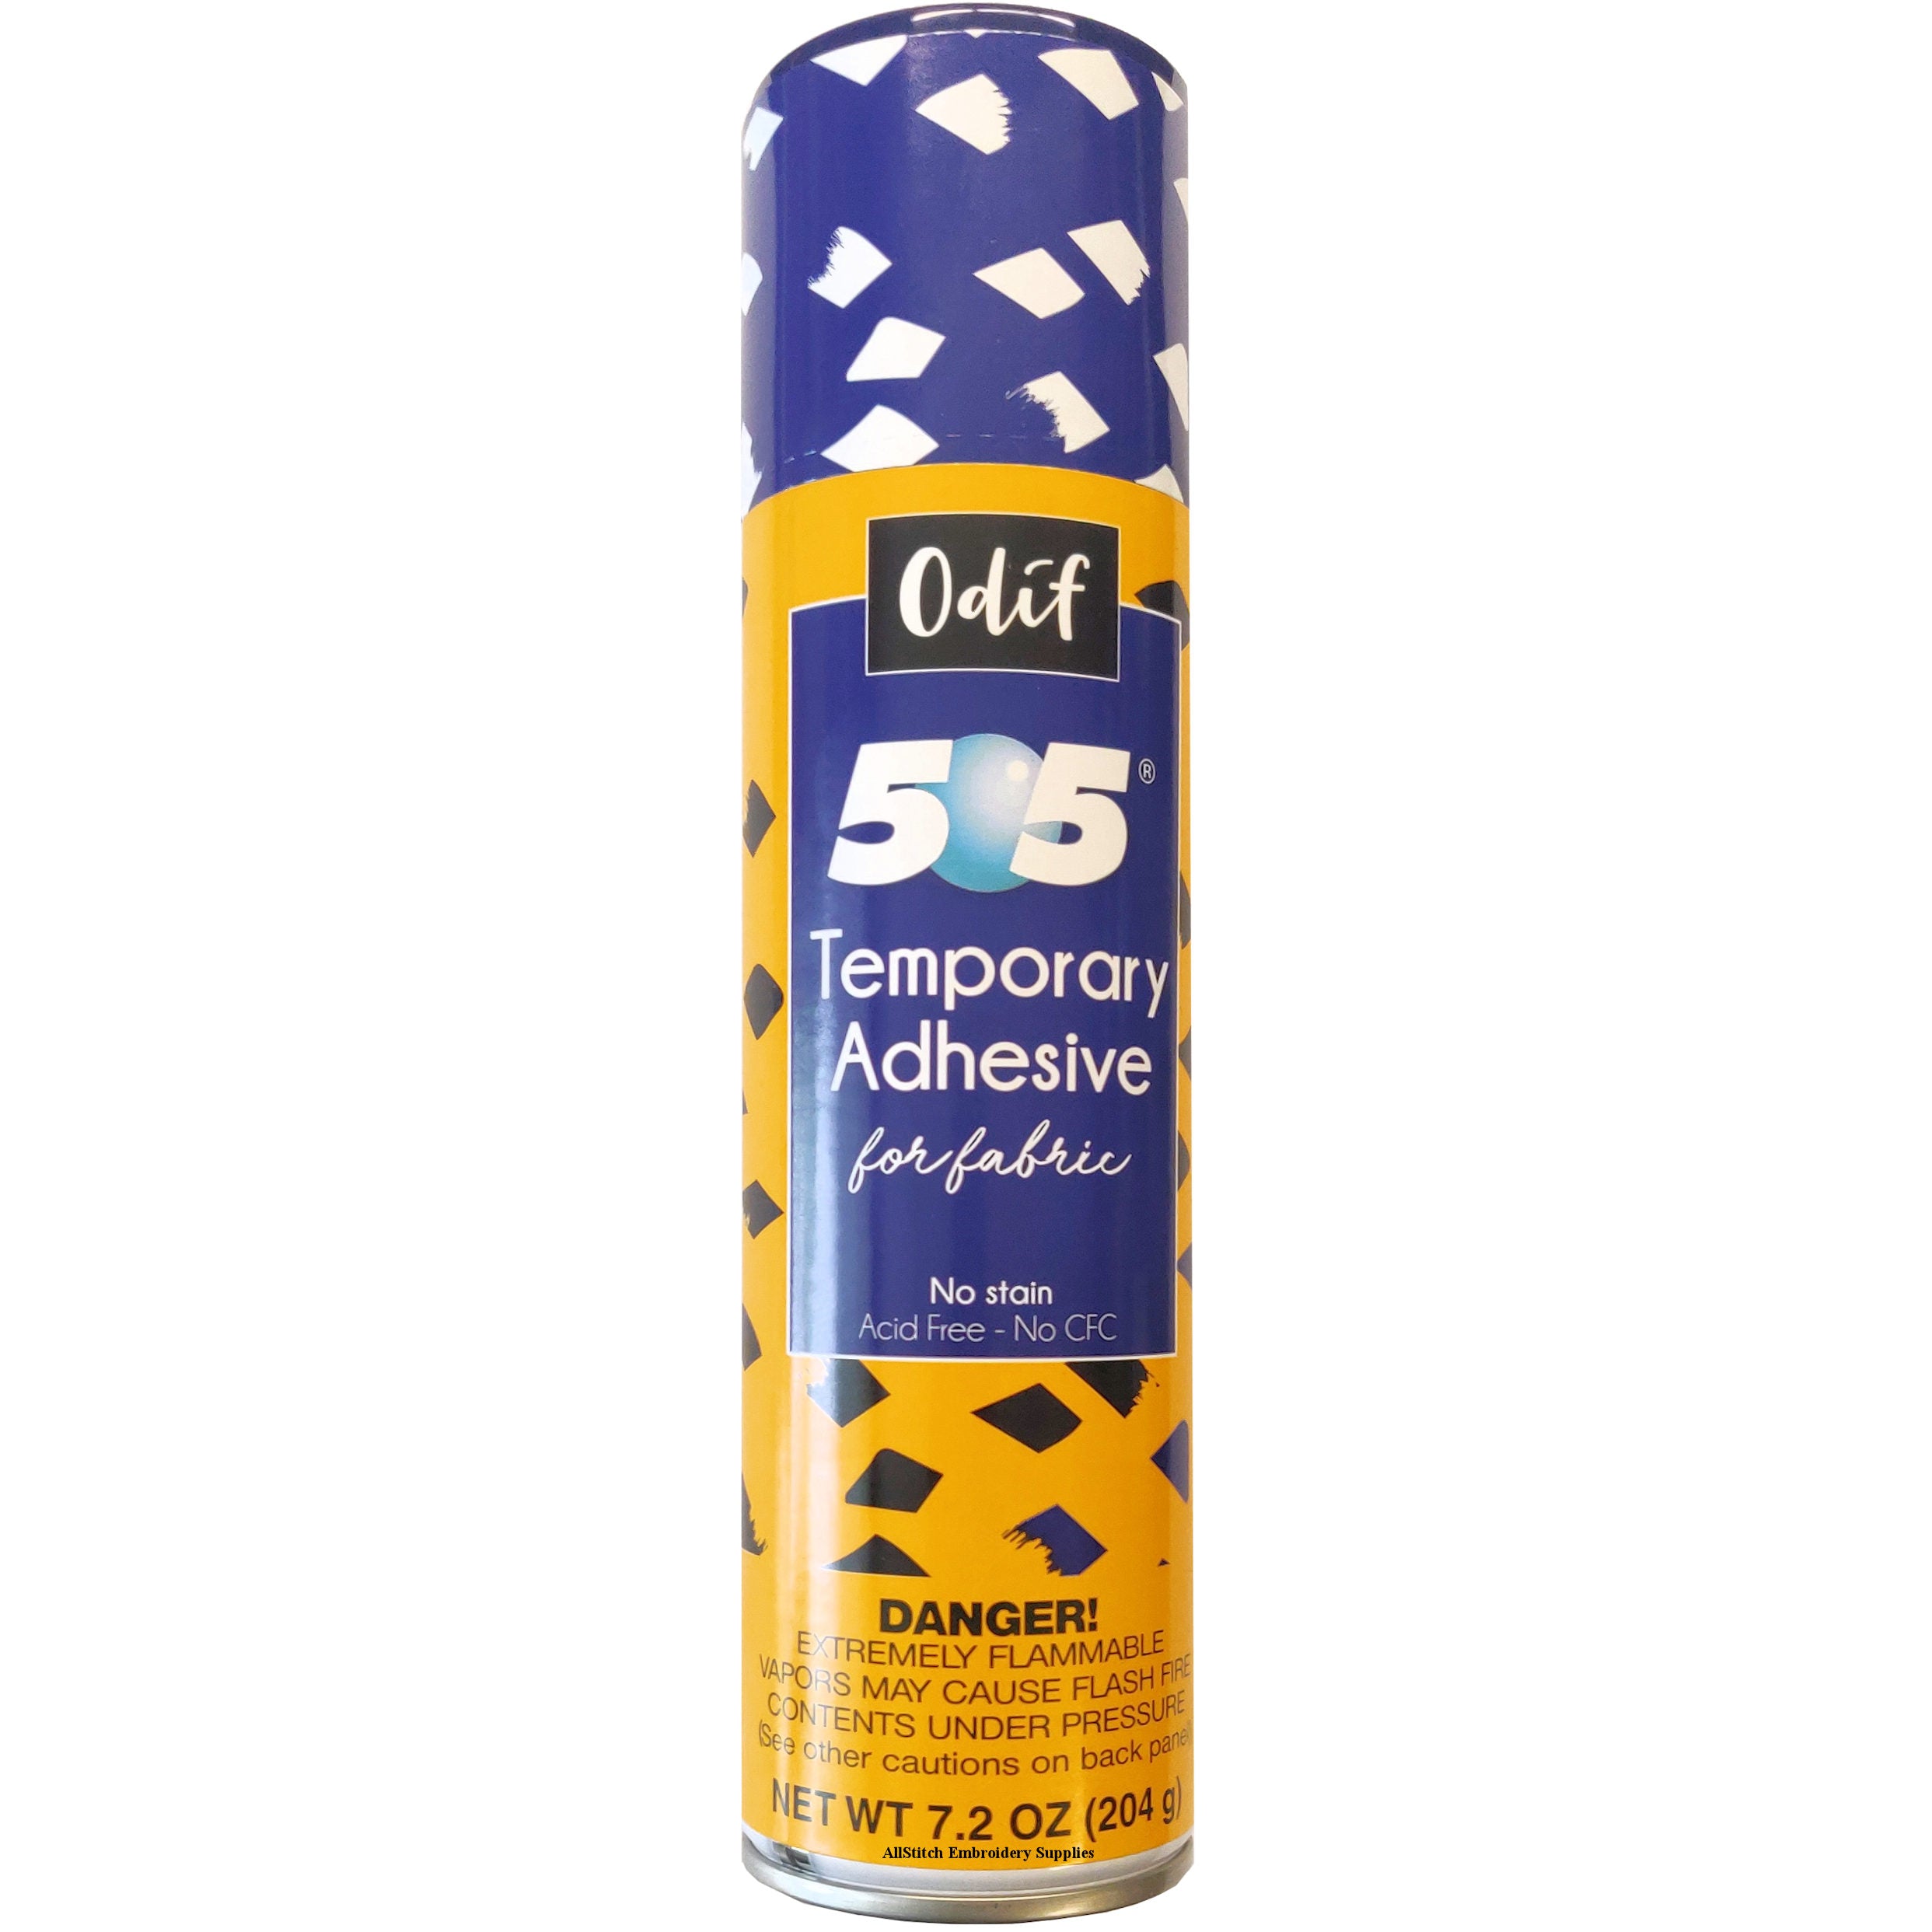 Odif 909 Permanent Fabric Spray Adhesive - 250ml